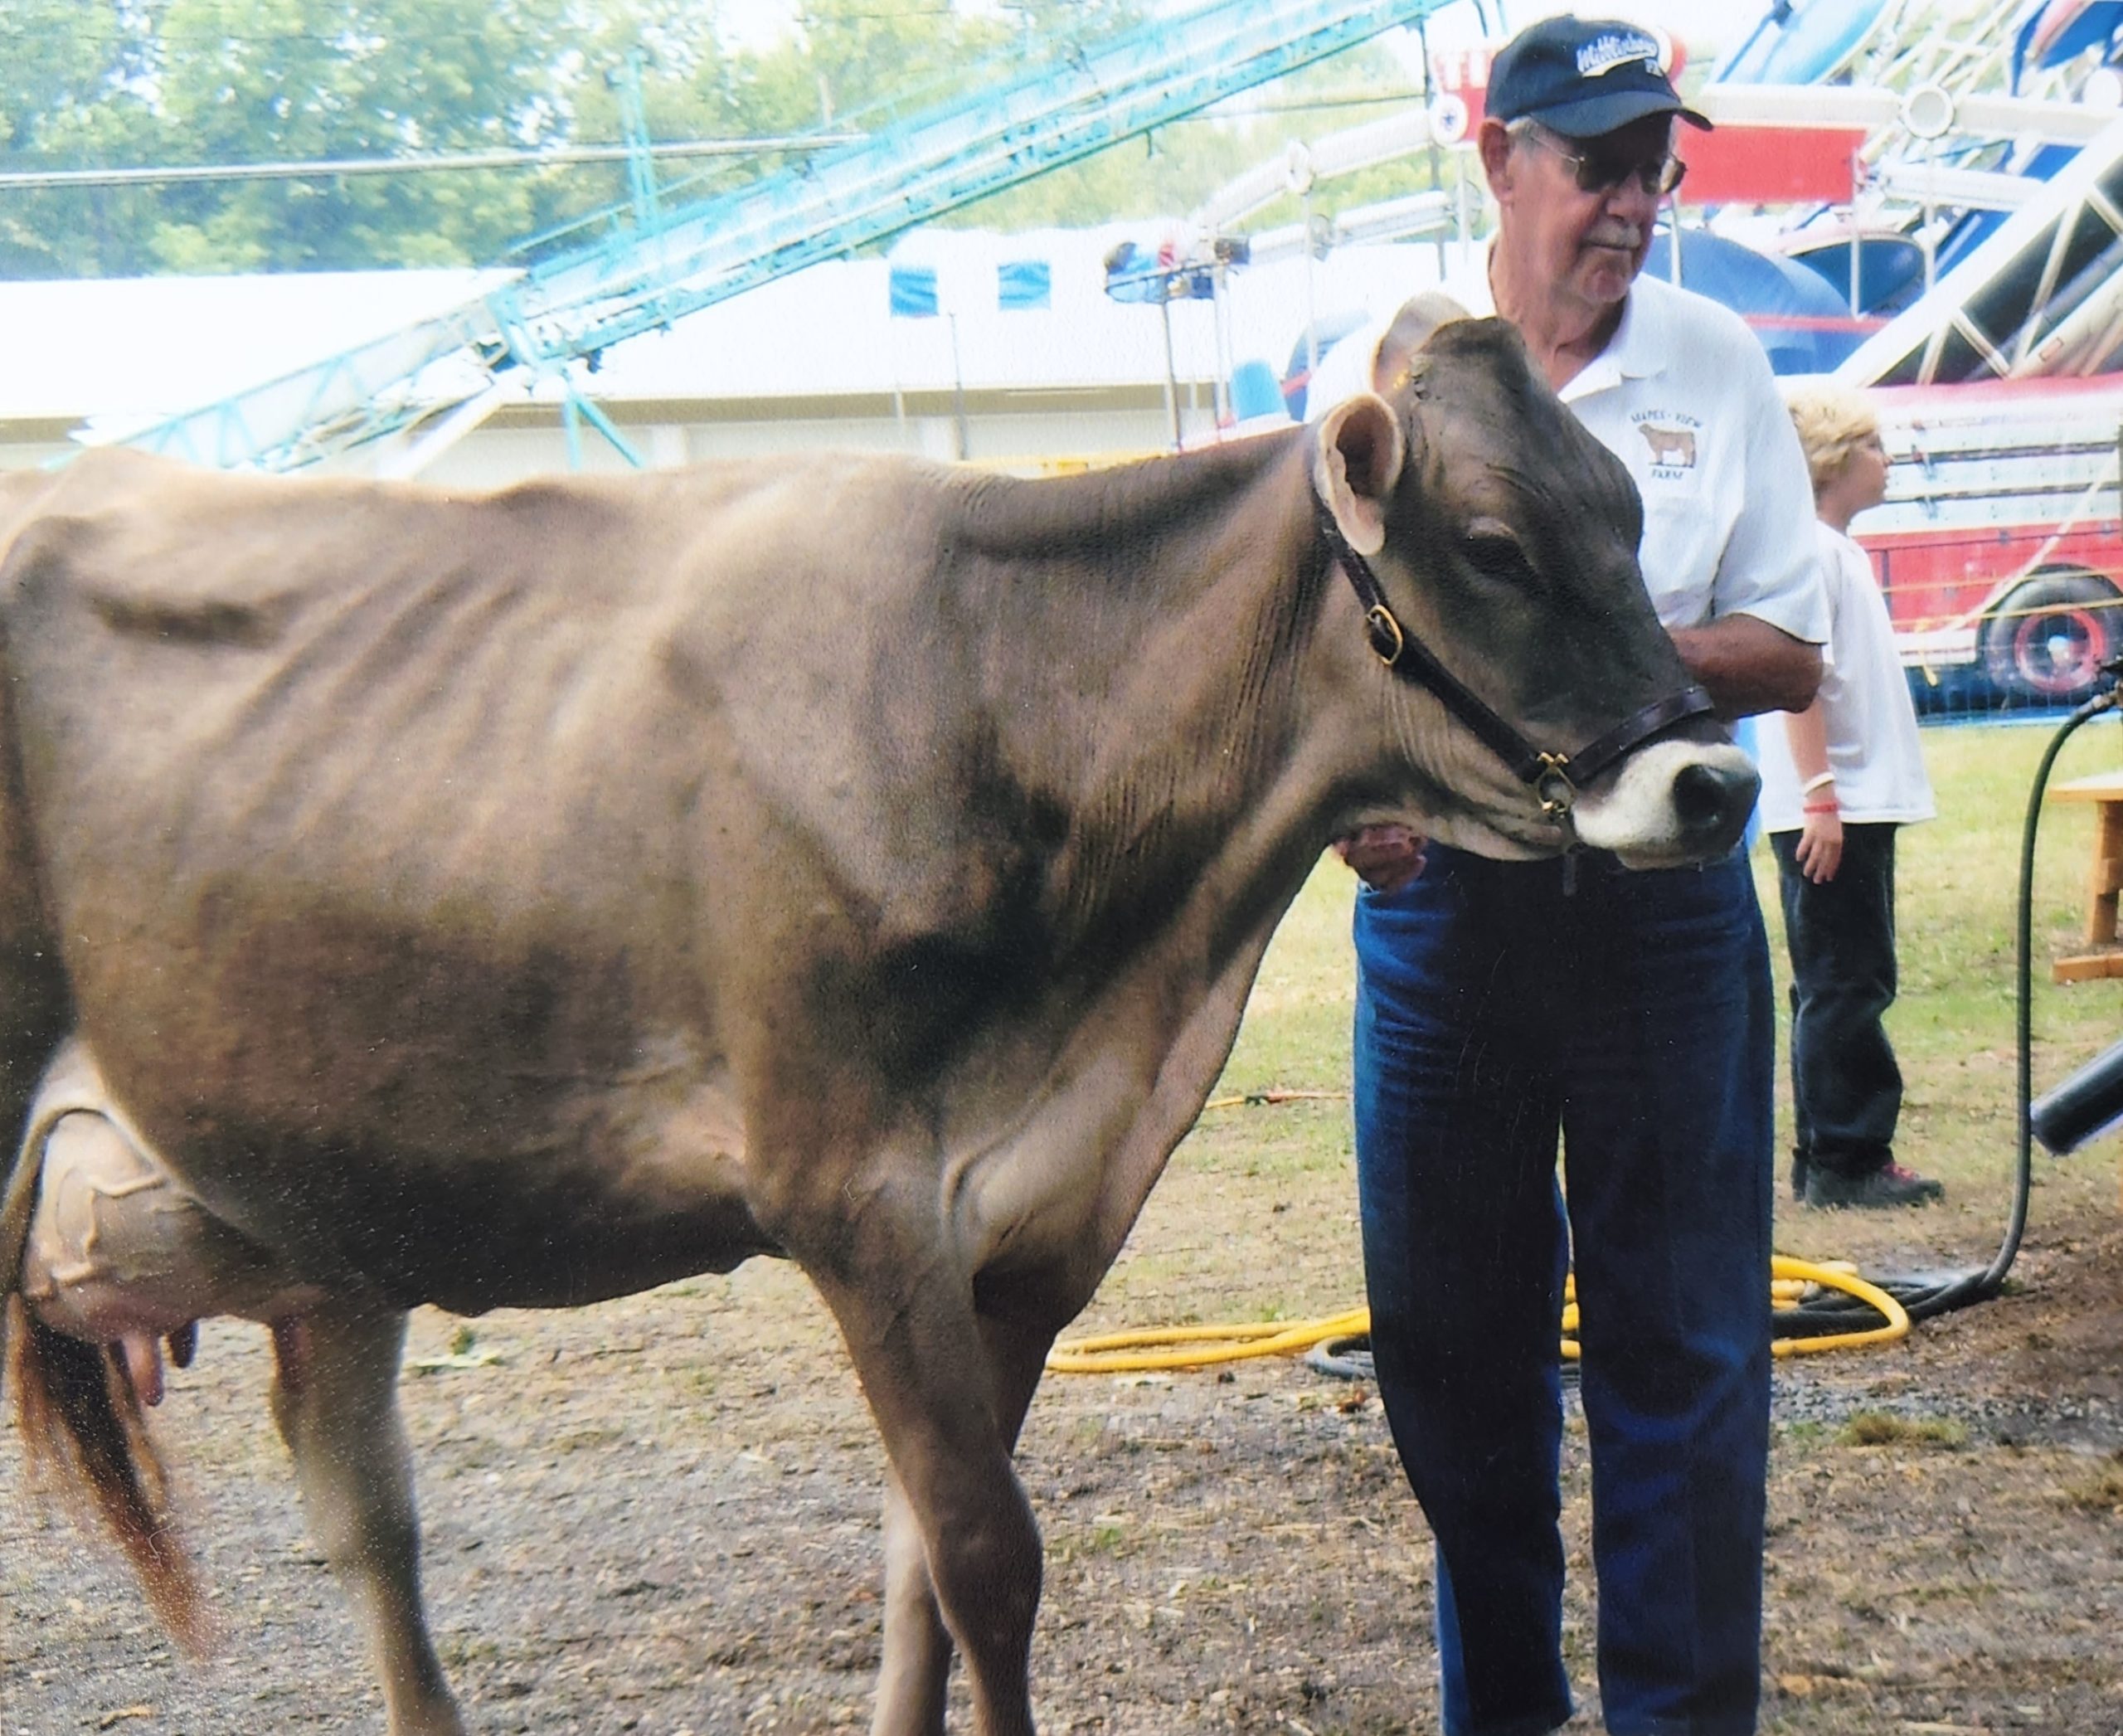 A dairy senior man next to a dairy cow.